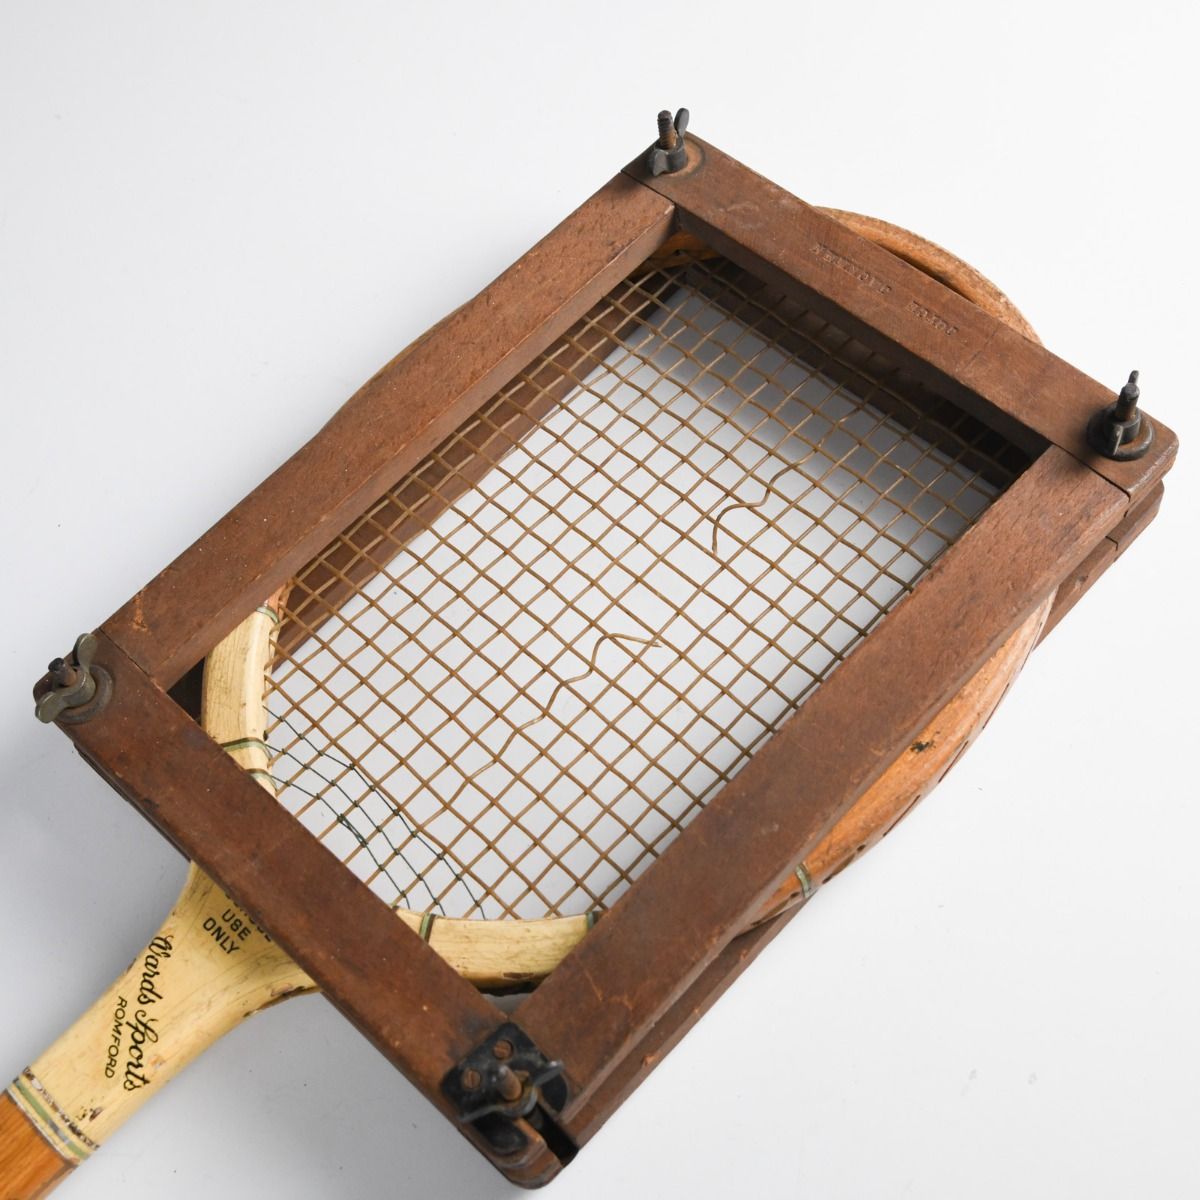 Vintage Dunlop Wooden Tennis Racket with Frame